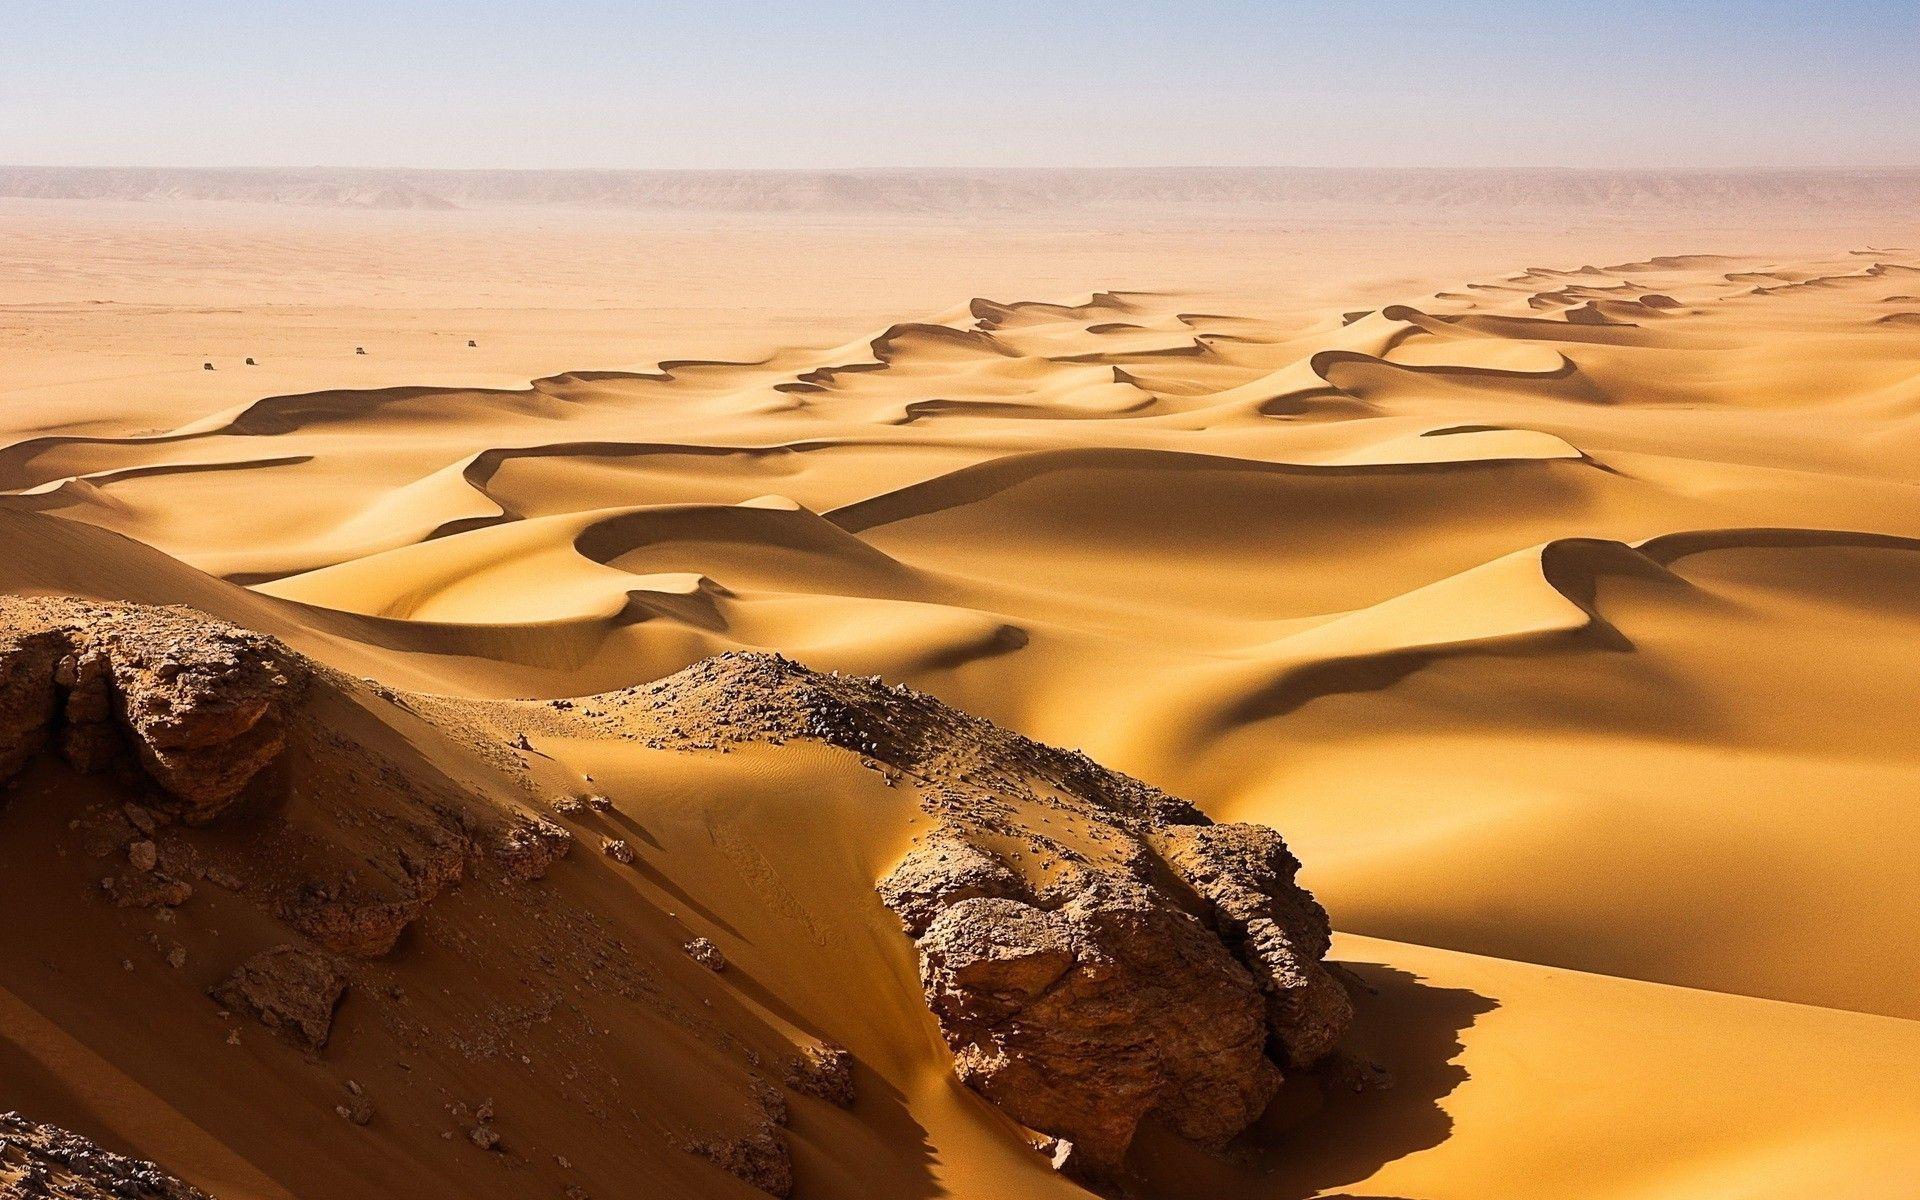 Good Looking Desert Sand Dunes HD Wallpaper 1920x1200PX